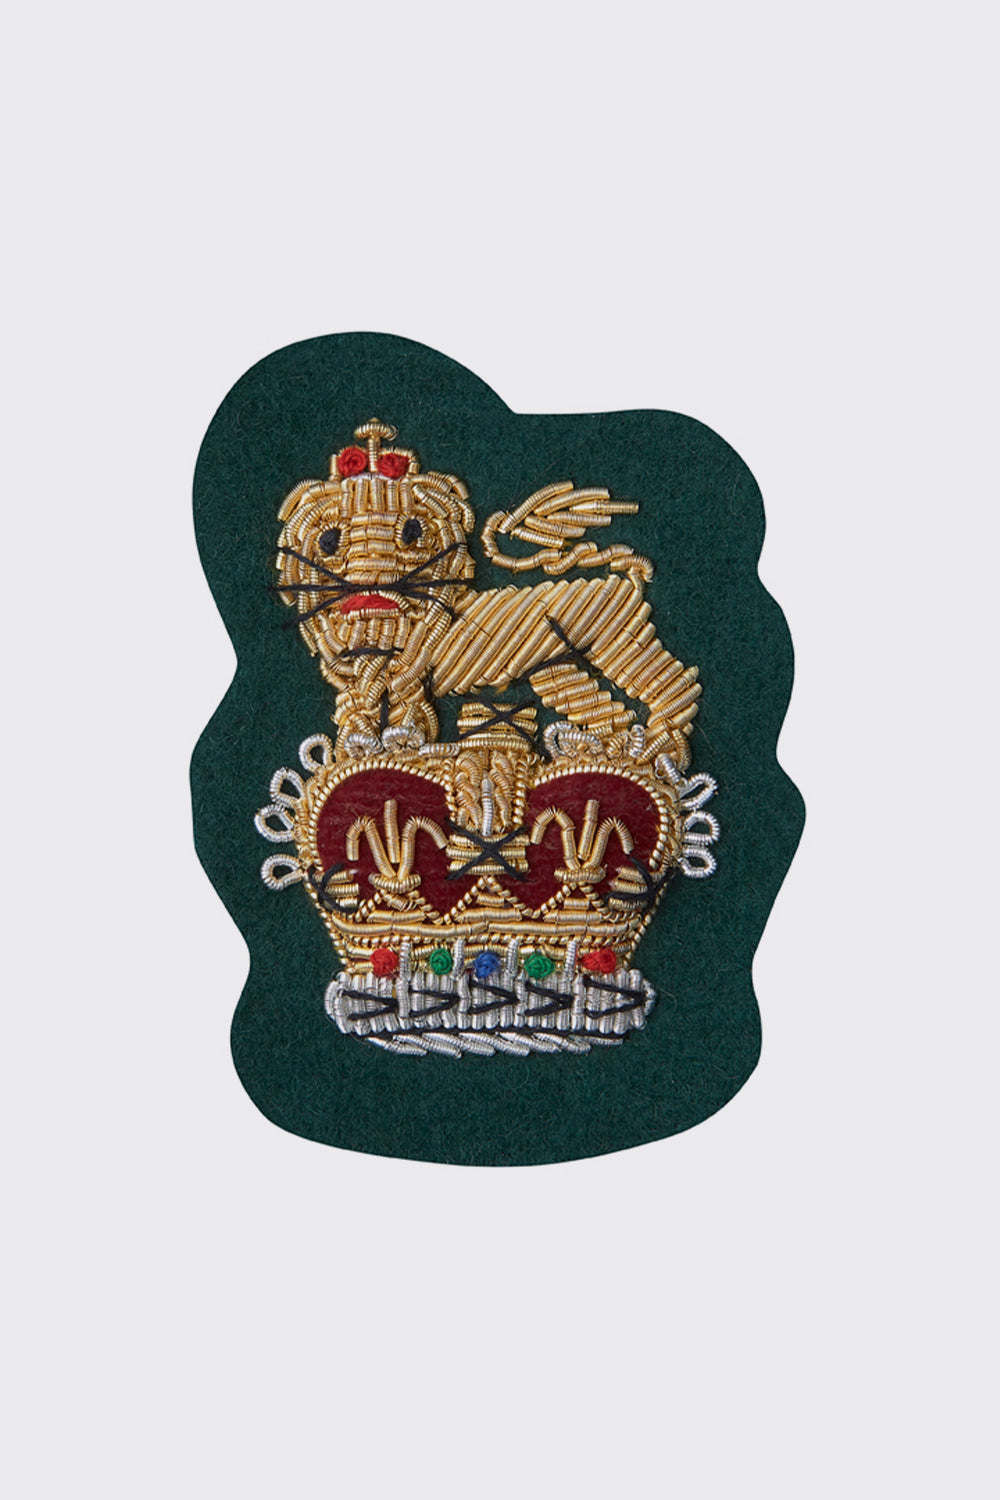 British Army Staff Colonels Beret Badge -  Commando Green